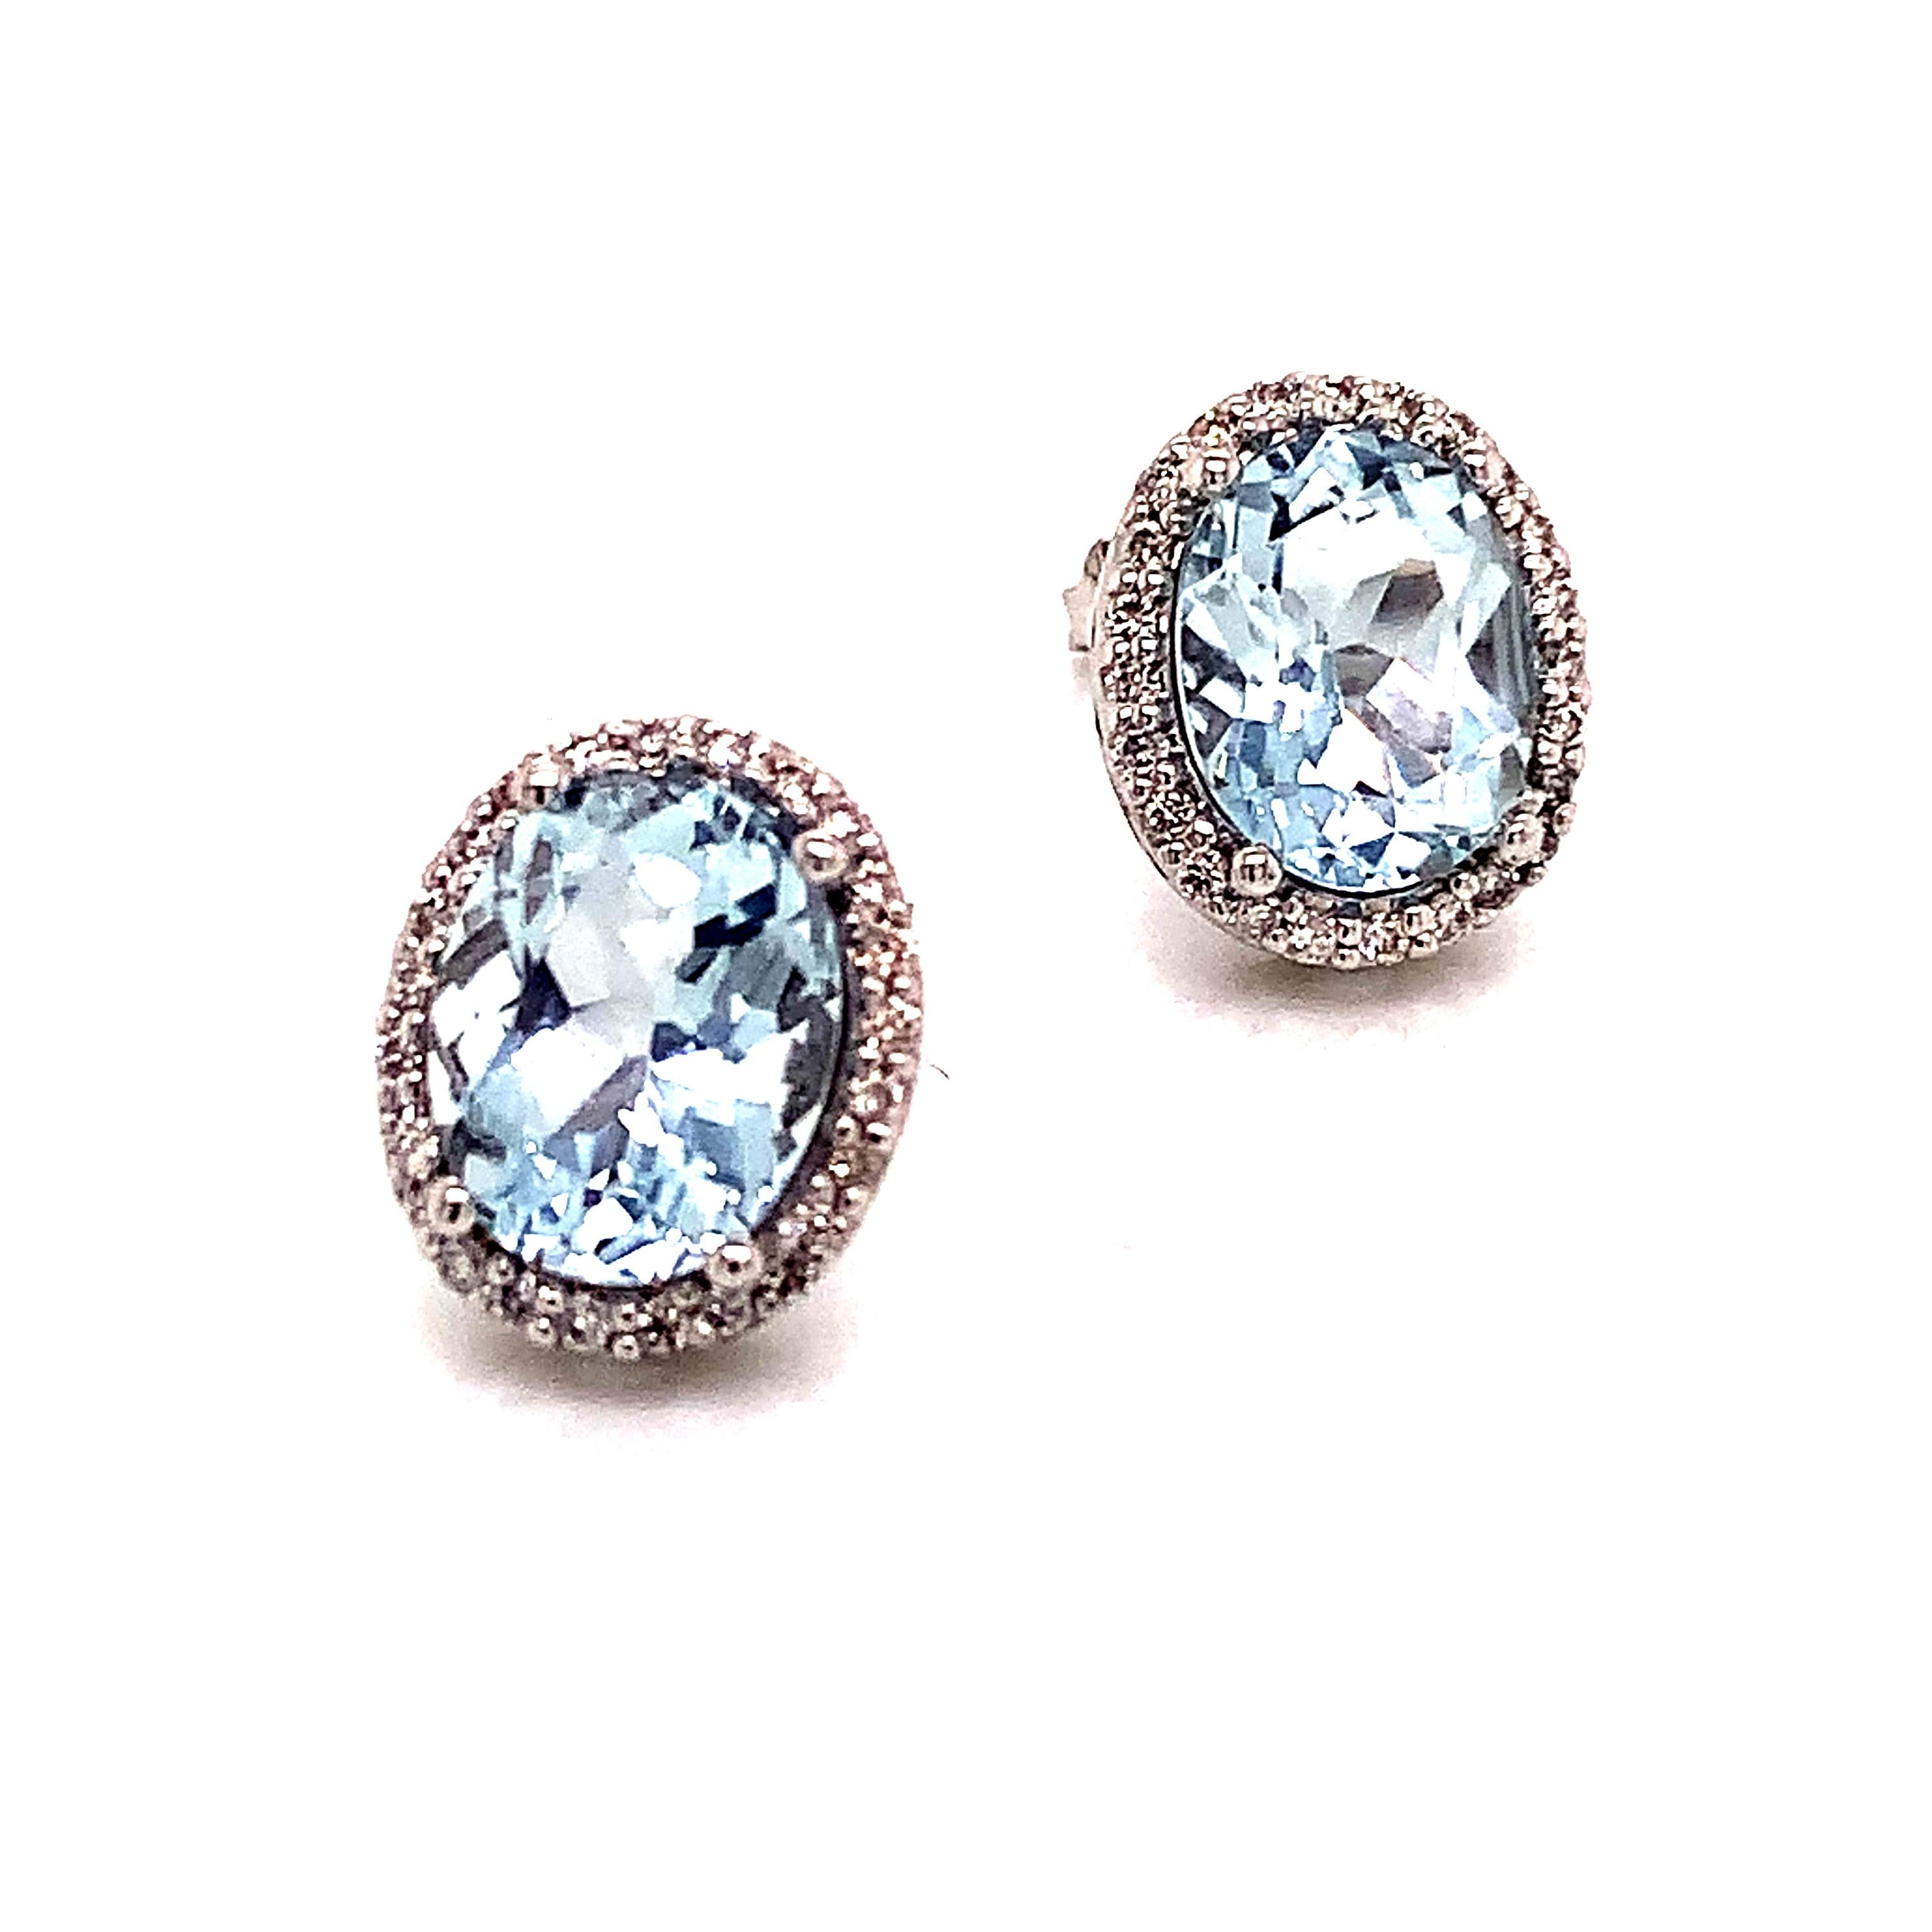 Natural Aquamarine Diamond Stud Earrings 14k WG 5.46 TCW Certified For Sale 3